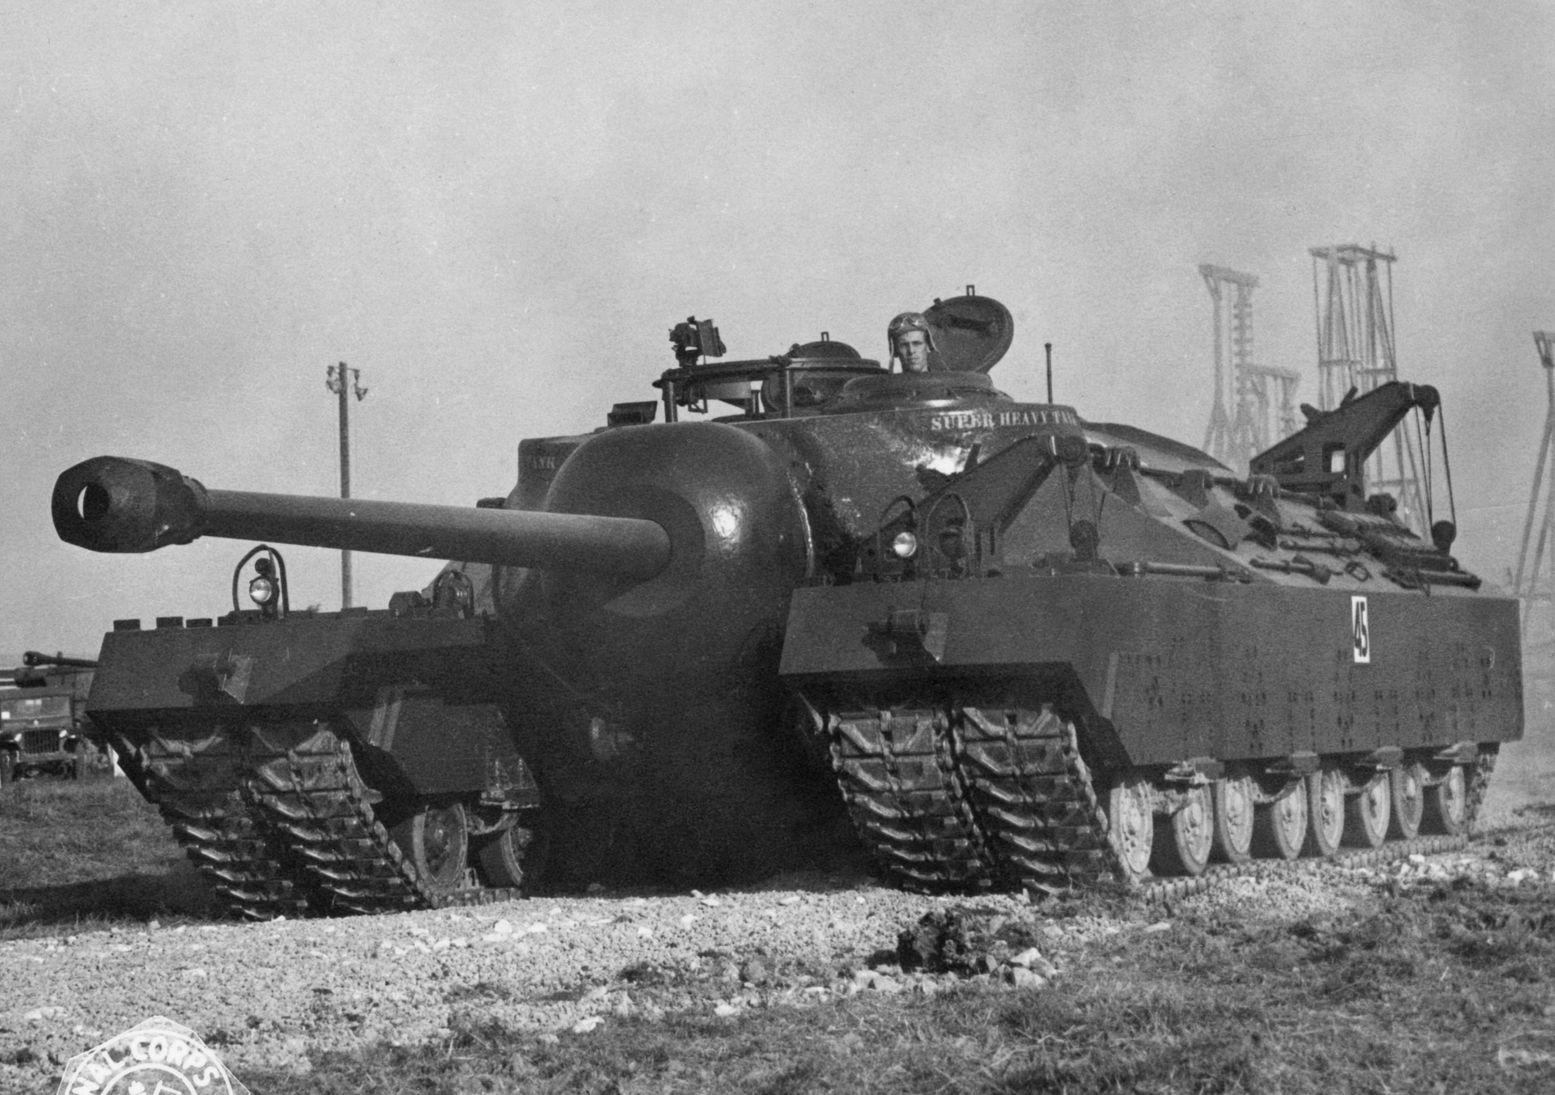 Tank killers a history of america's world war ii tank destroyer force ...